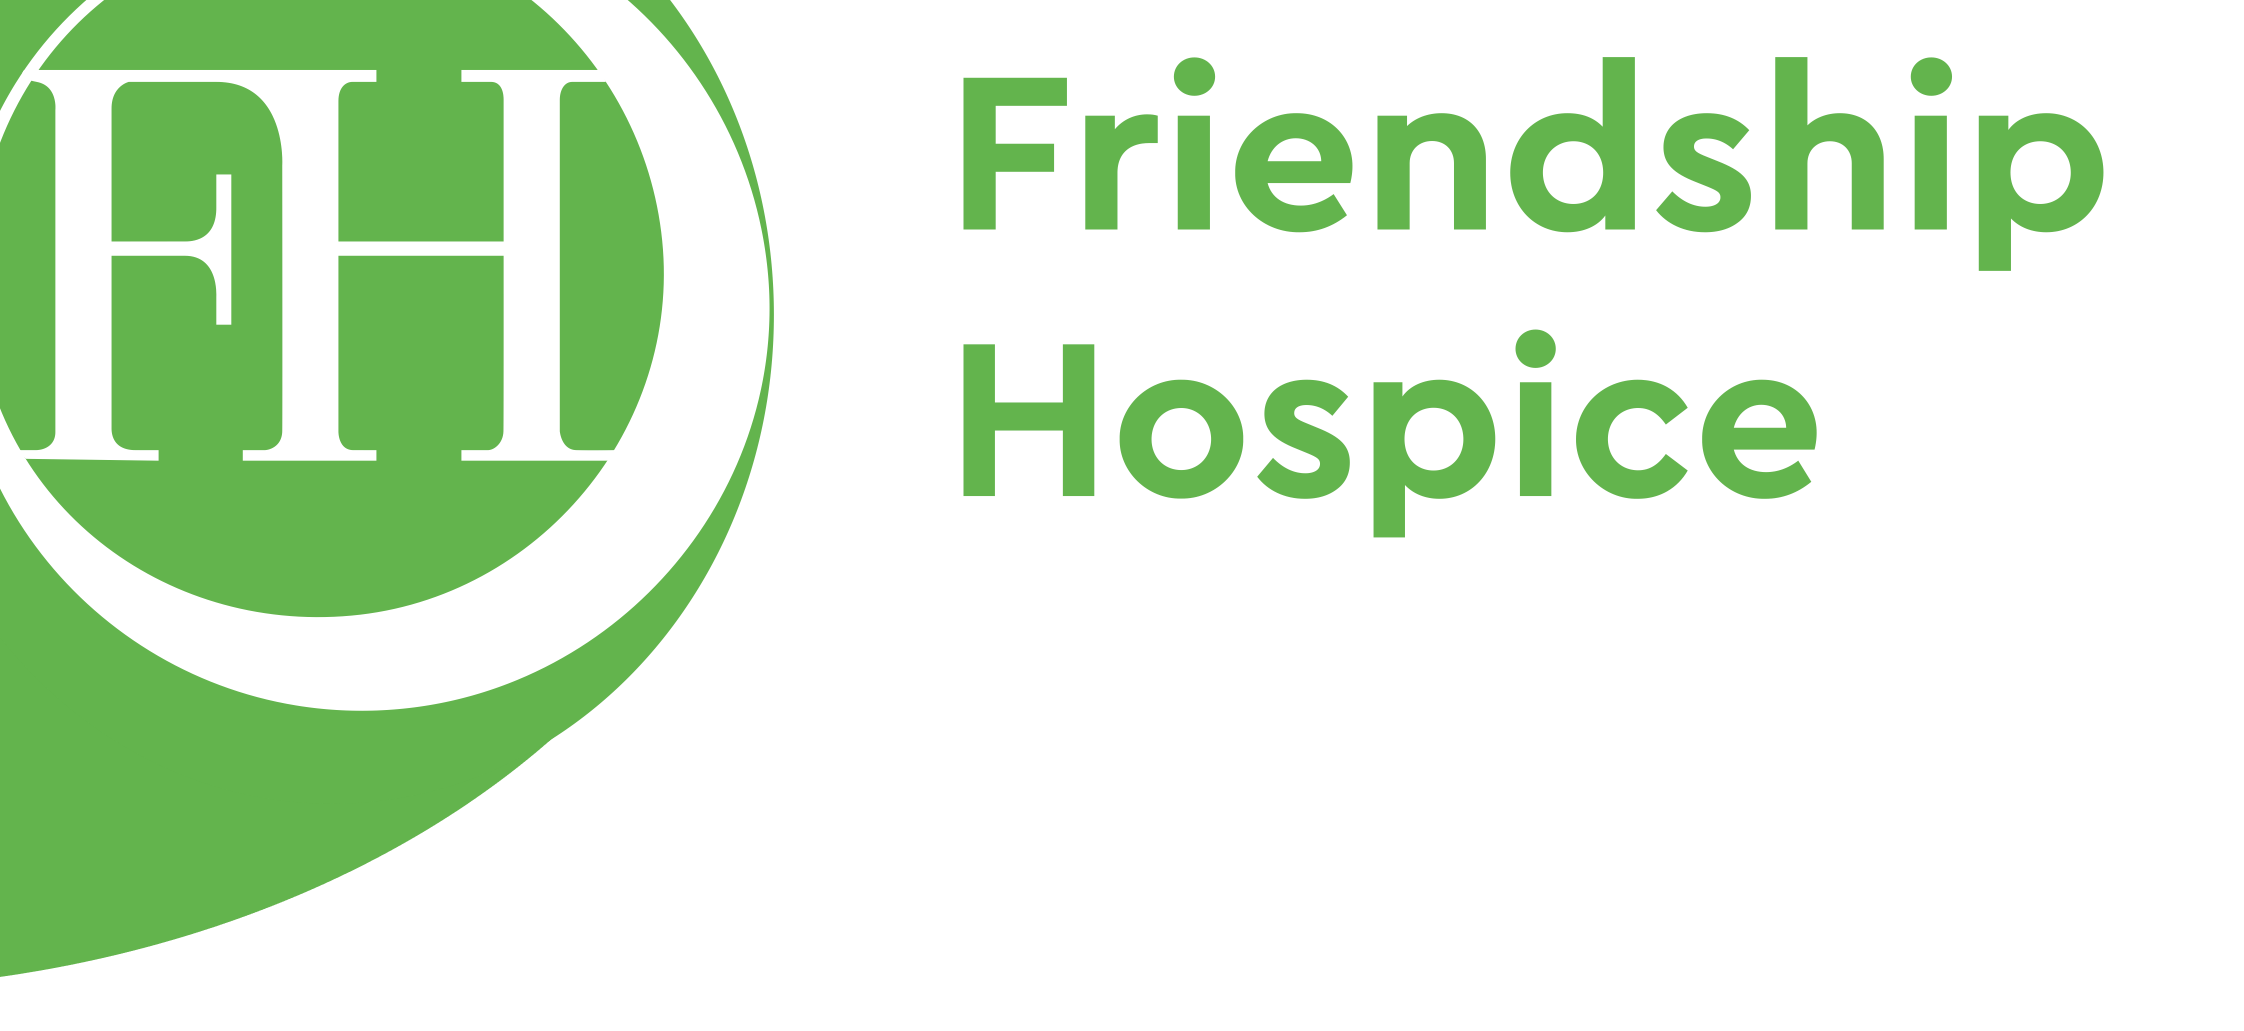 Friendship hospice Logo